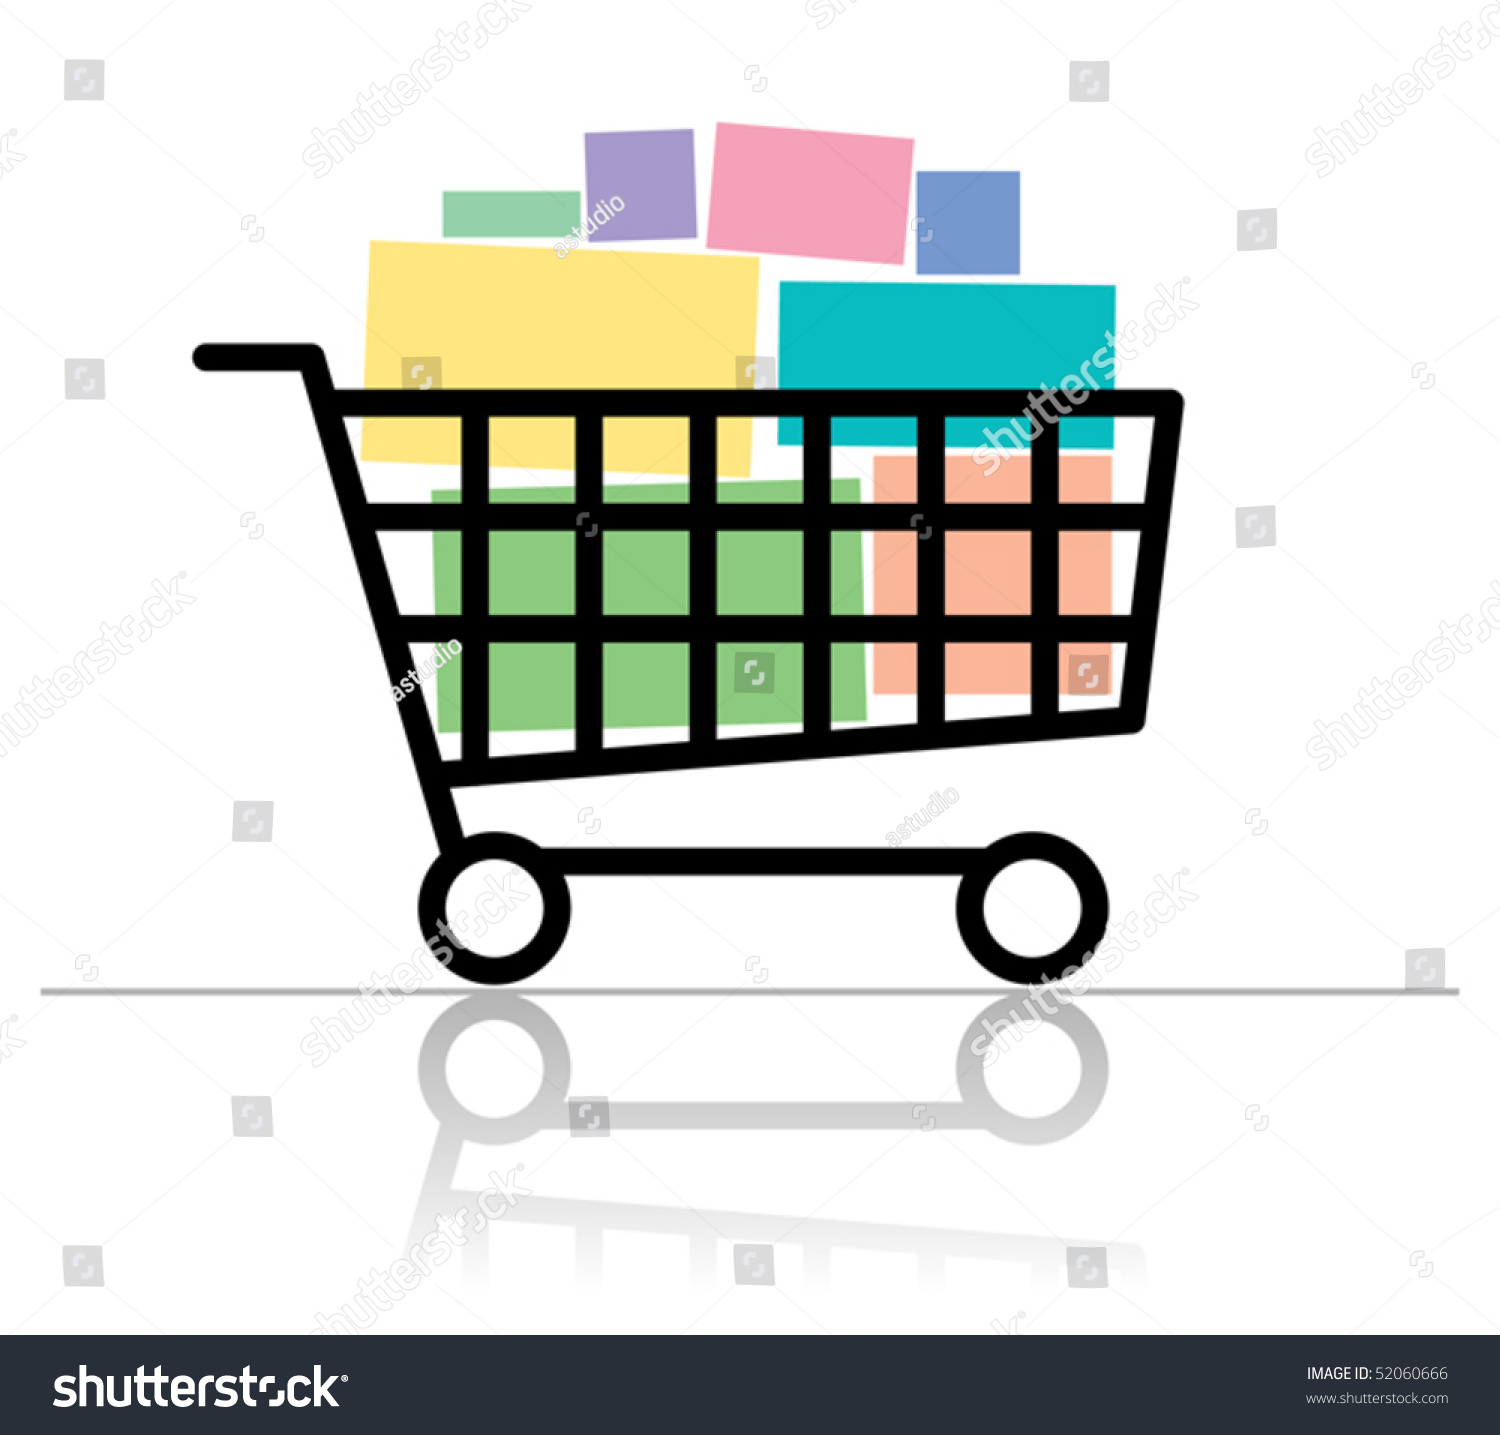 Shopping Cart, Vector Illustration - 52060666 : Shutterstock